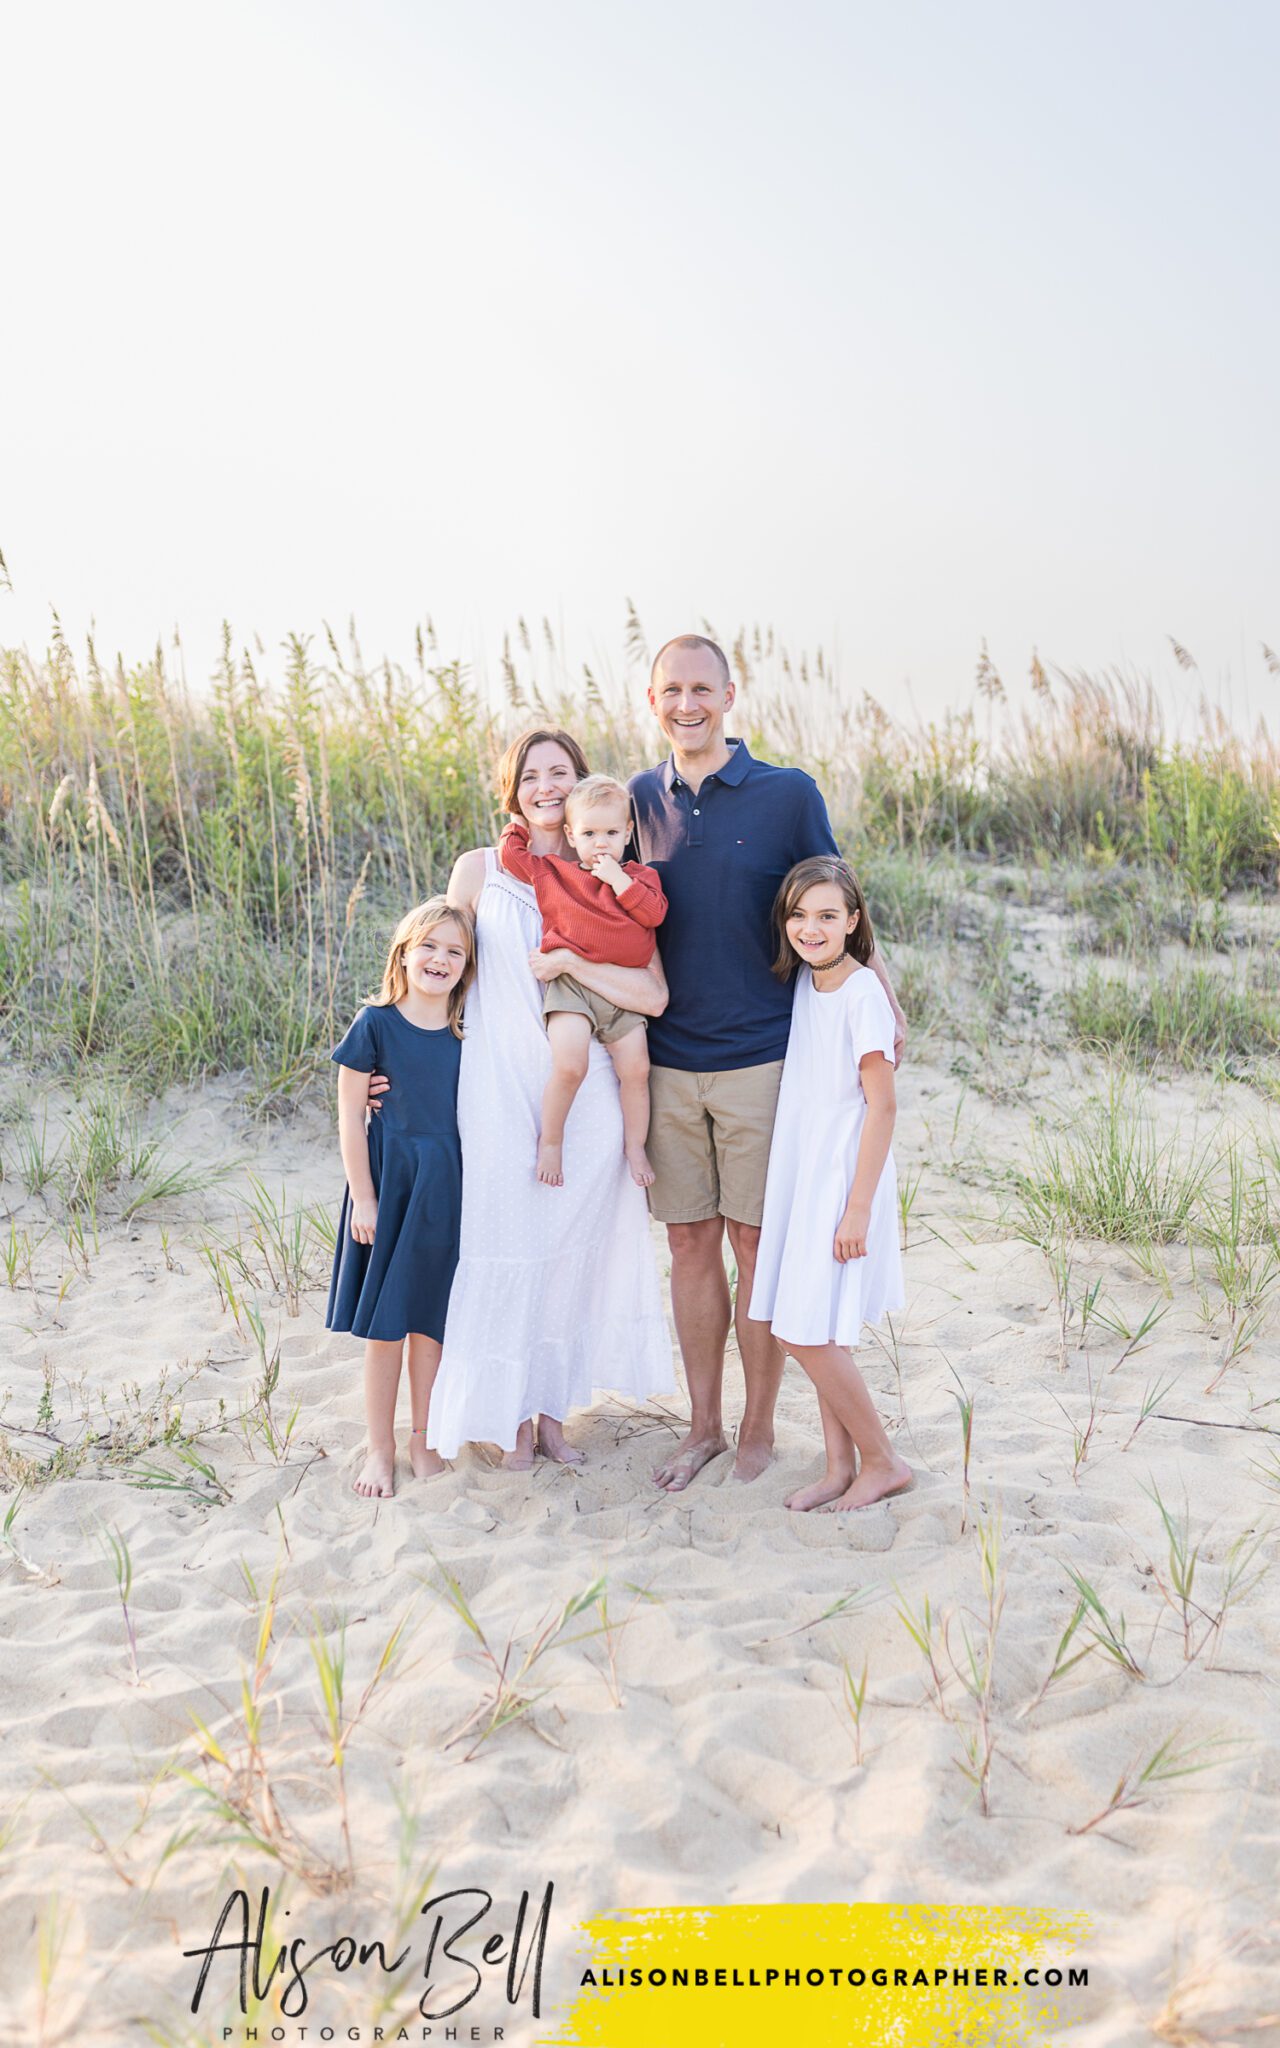 Family Photographers in Virginia beach - alison bell, photographer